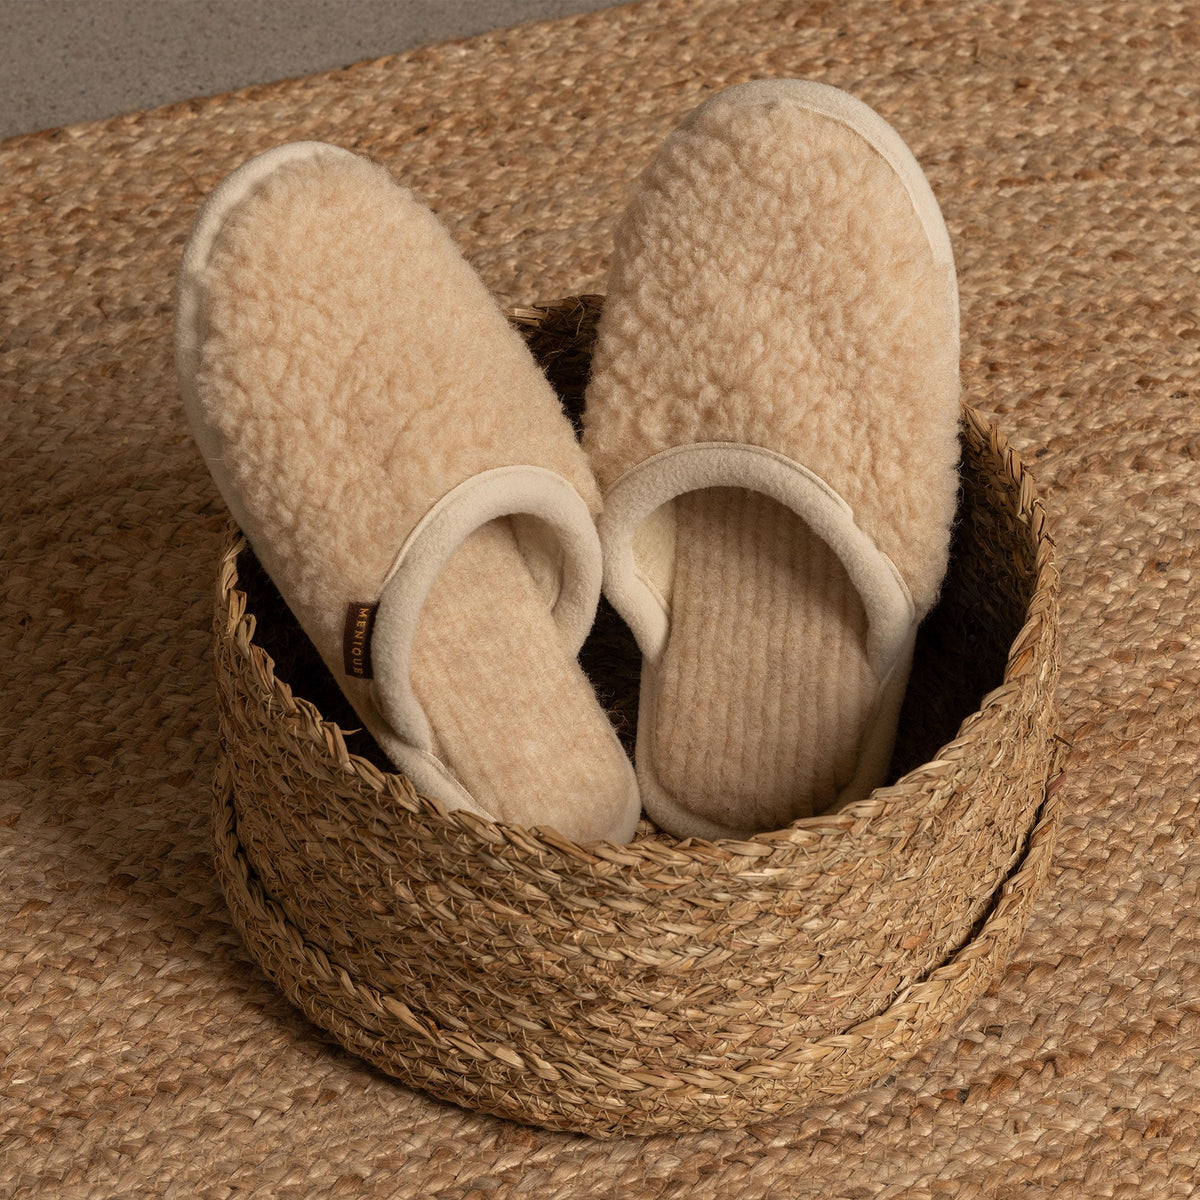 MENIQUE 100% Merino Wool Womens Fluffy Slippers